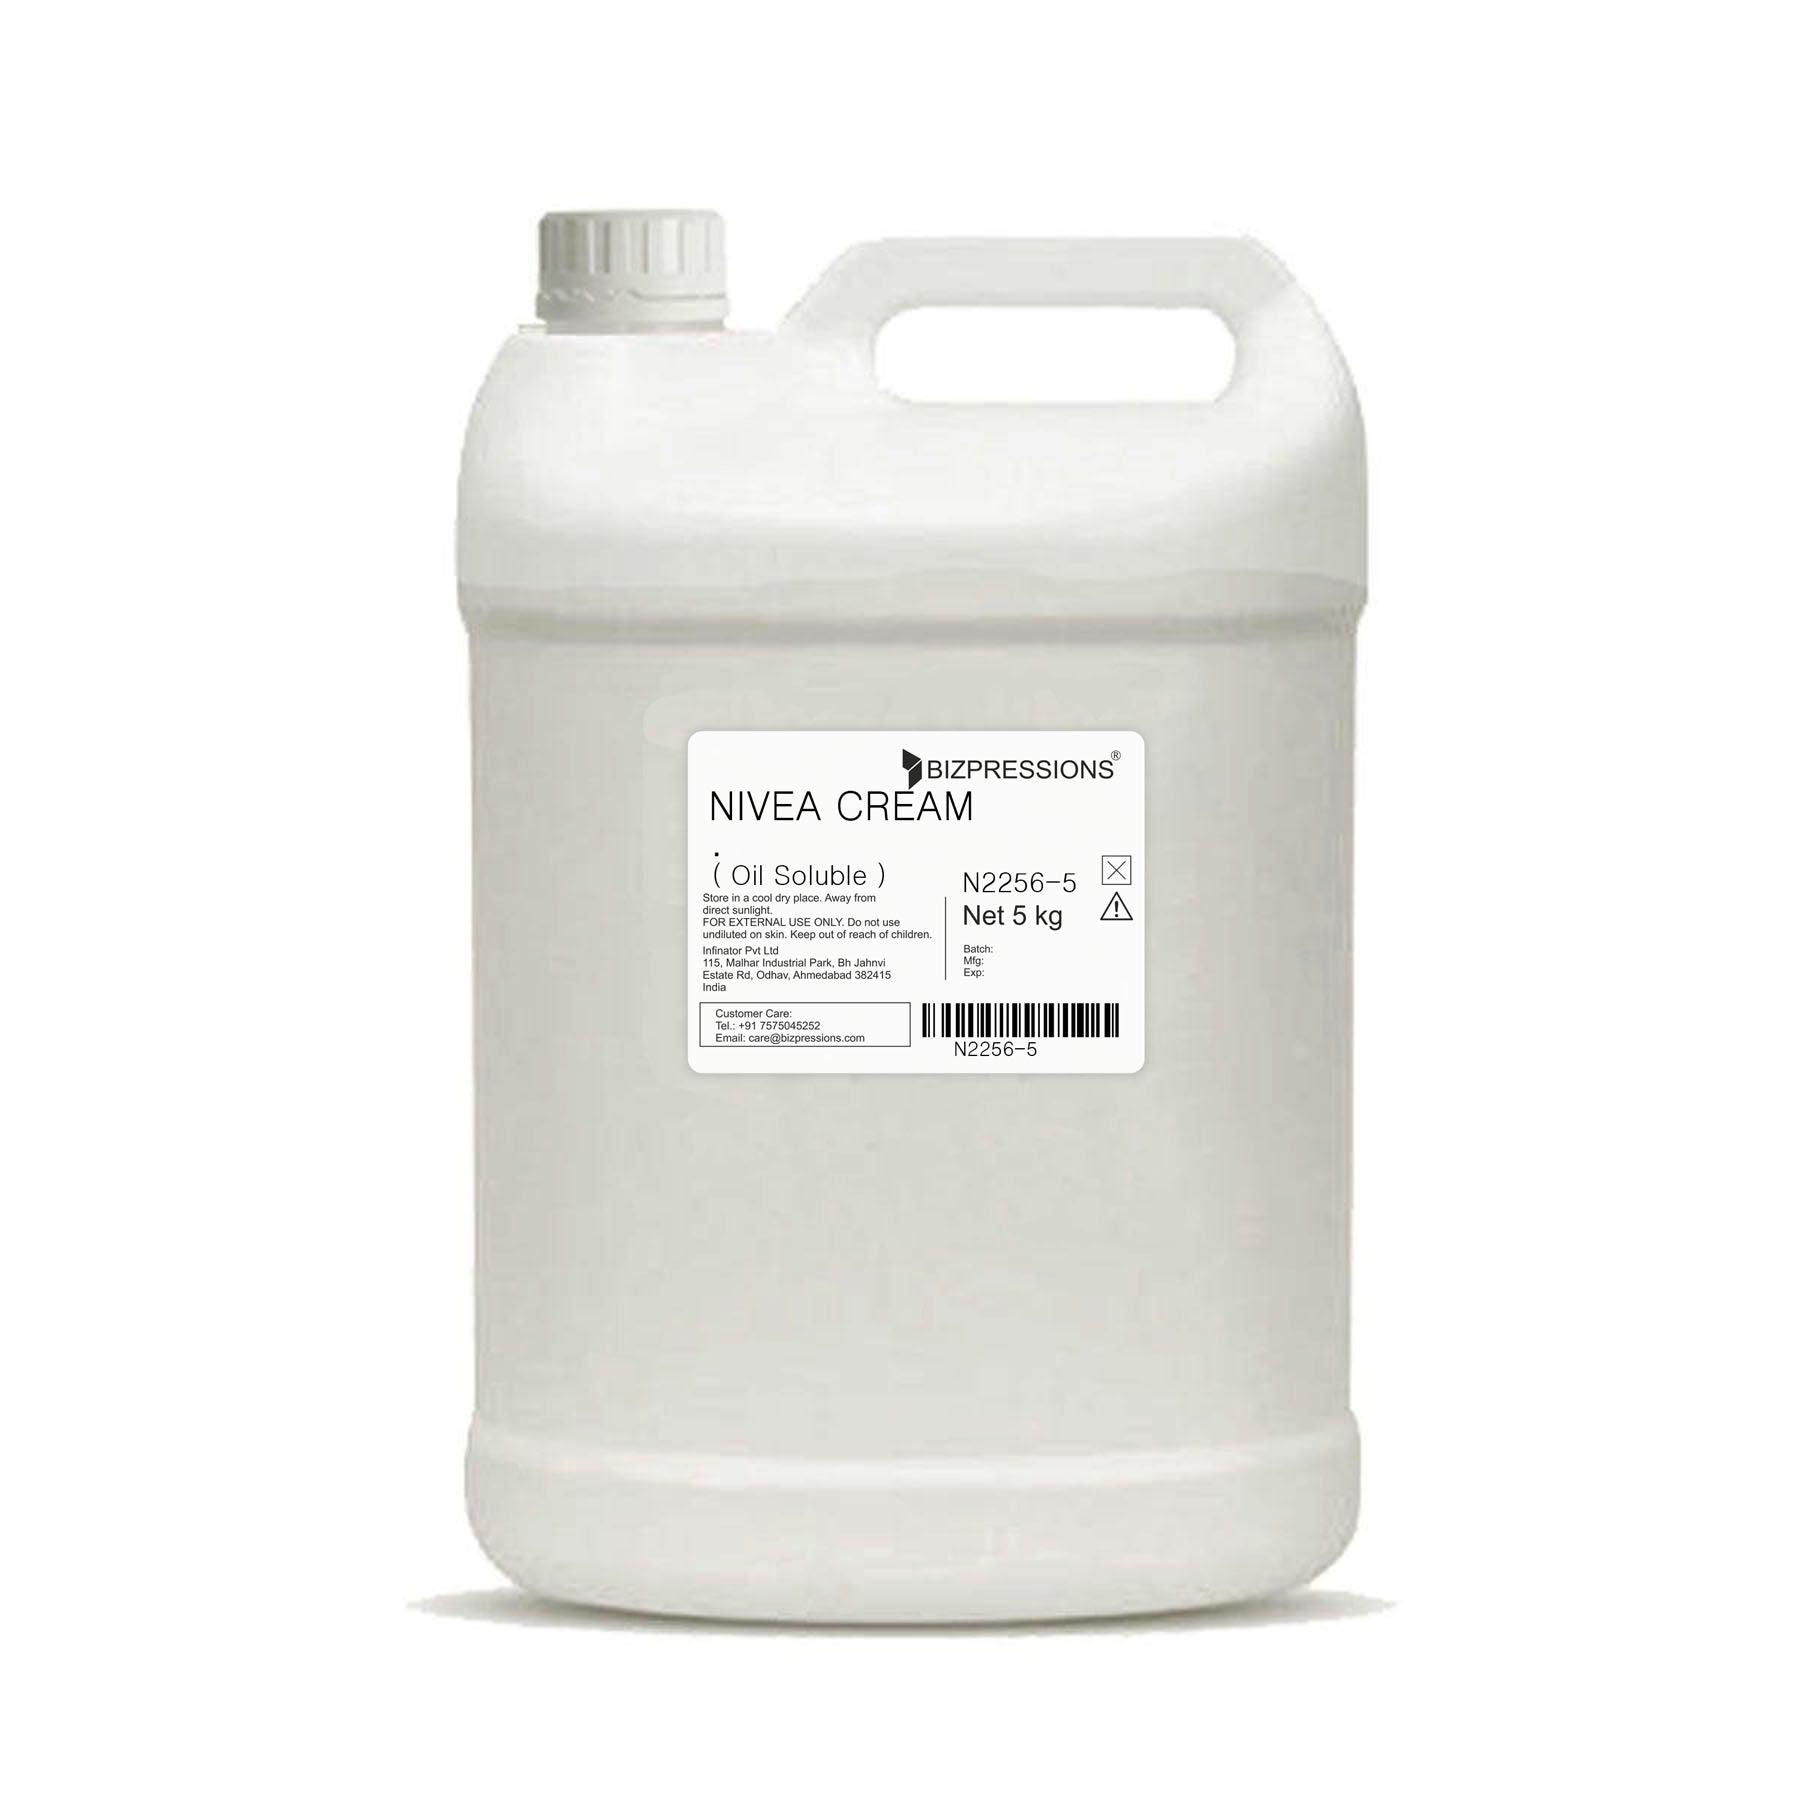 NIVEA CREAM - Fragrance ( Oil Soluble ) - 5 kg